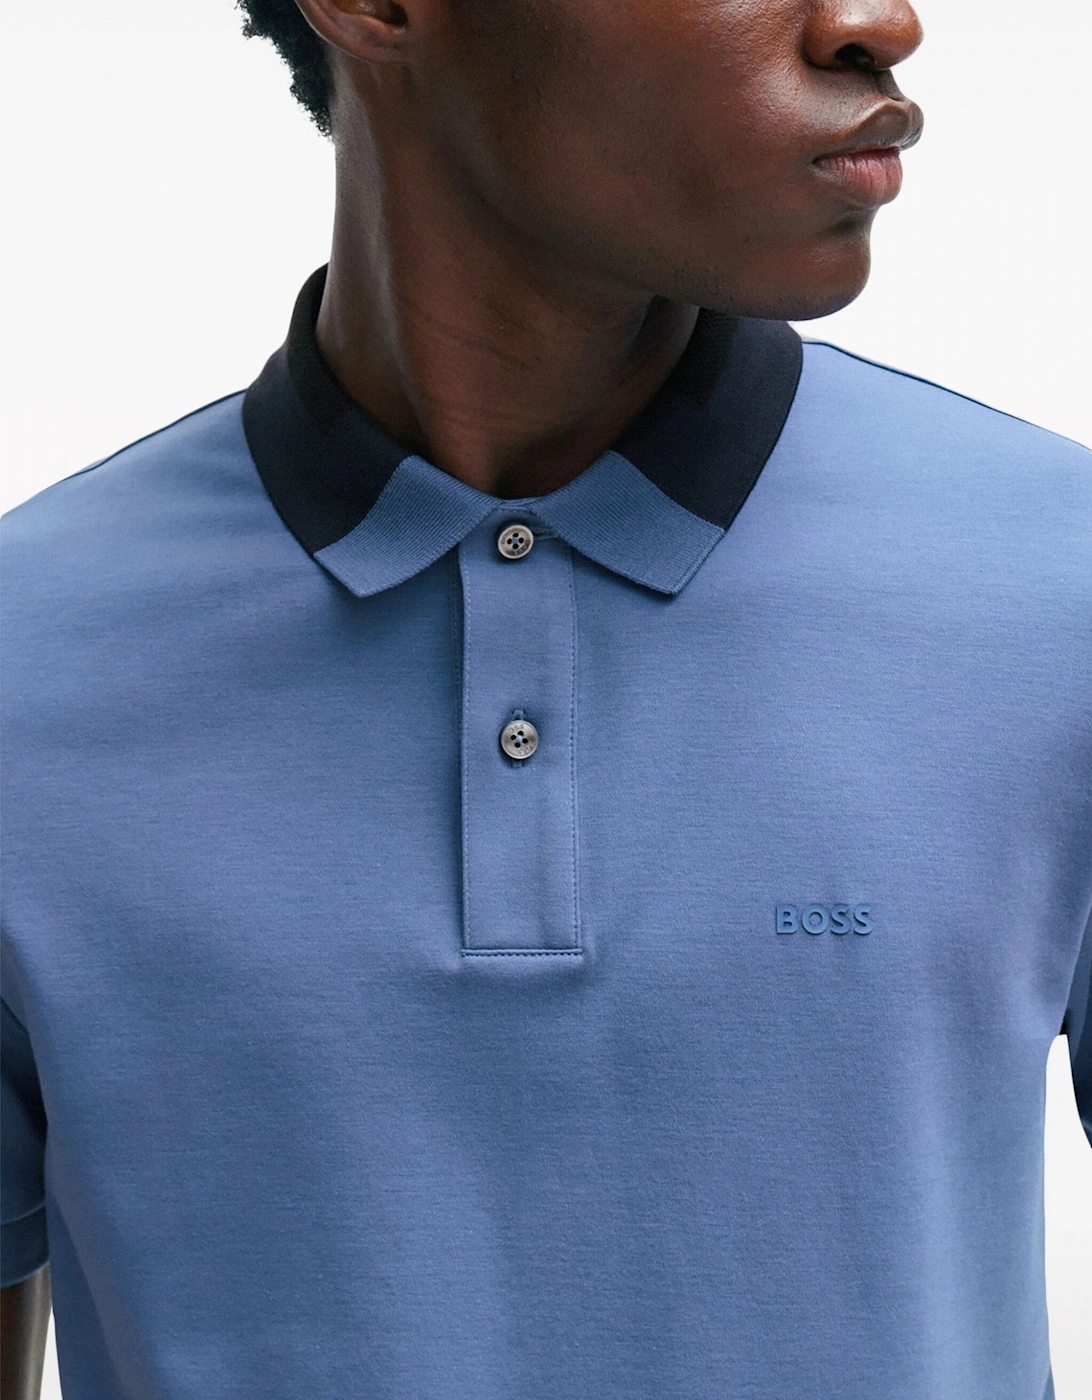 Phillipson 116 Polo Shirt Blue